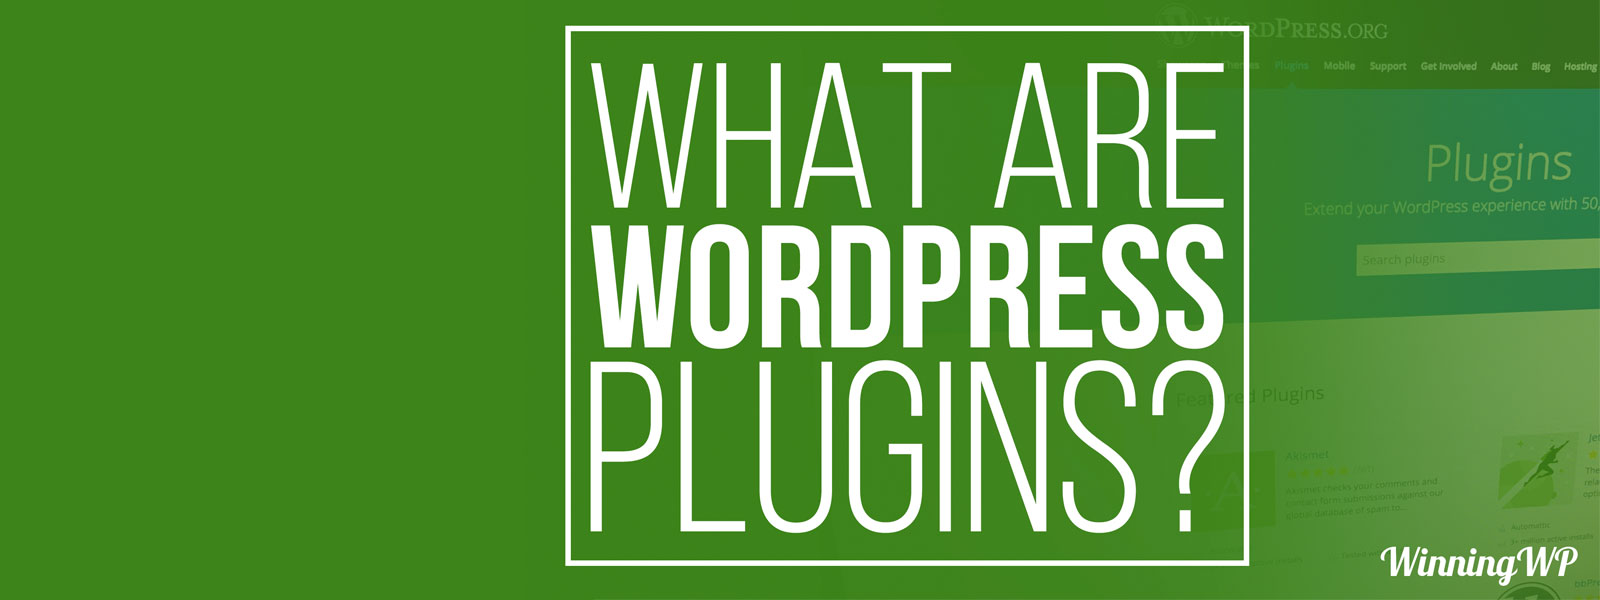 What are WordPress Plugins?